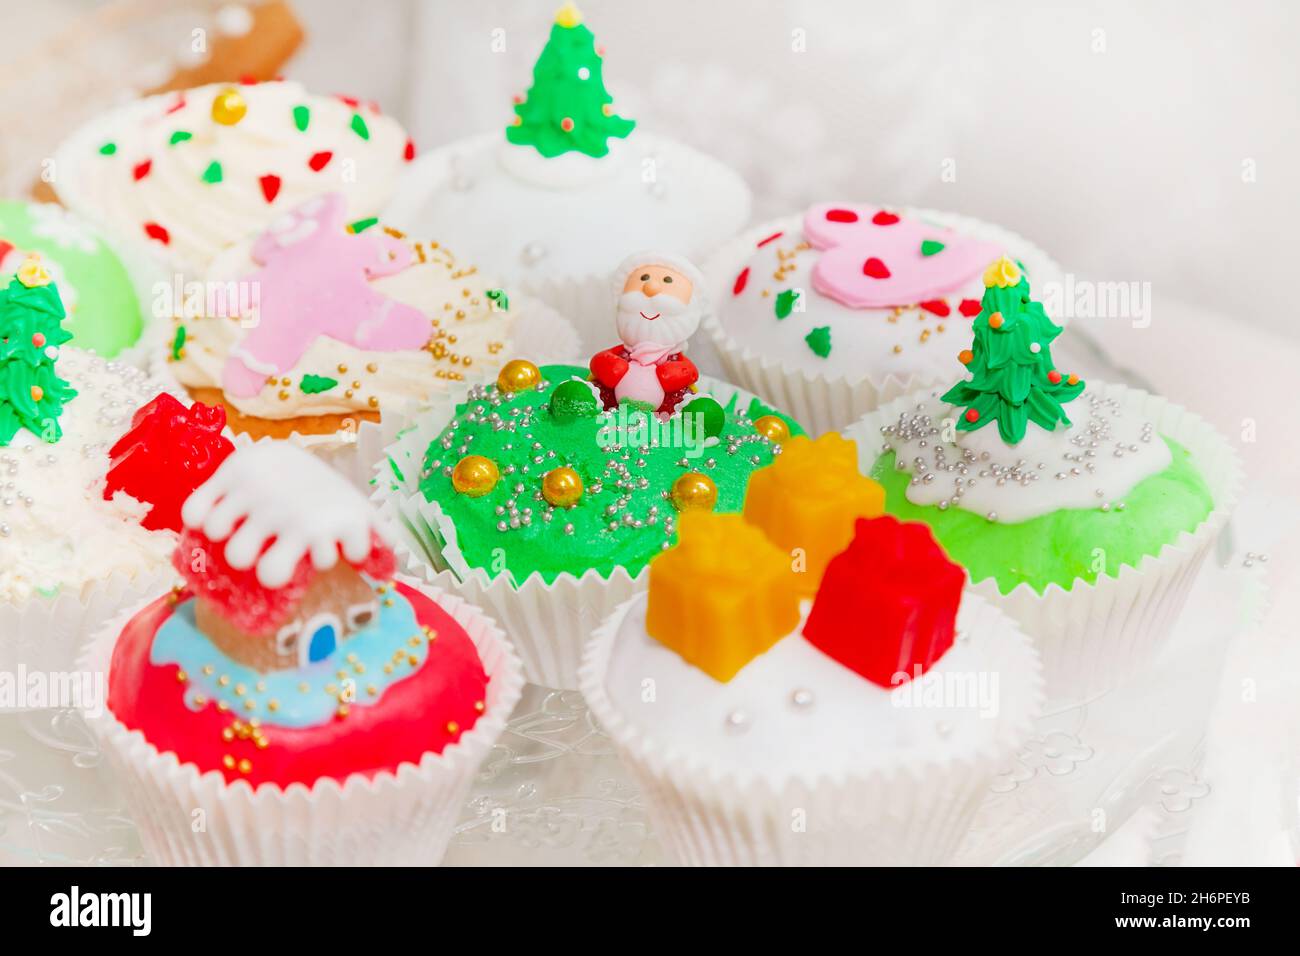 Pasteles caseros, pastelitos, magdalenas decoradas en un estilo navideño. Mini cupcakes de postre navideños festivos de temporada con símbolos decorativos tradicionales e Foto de stock